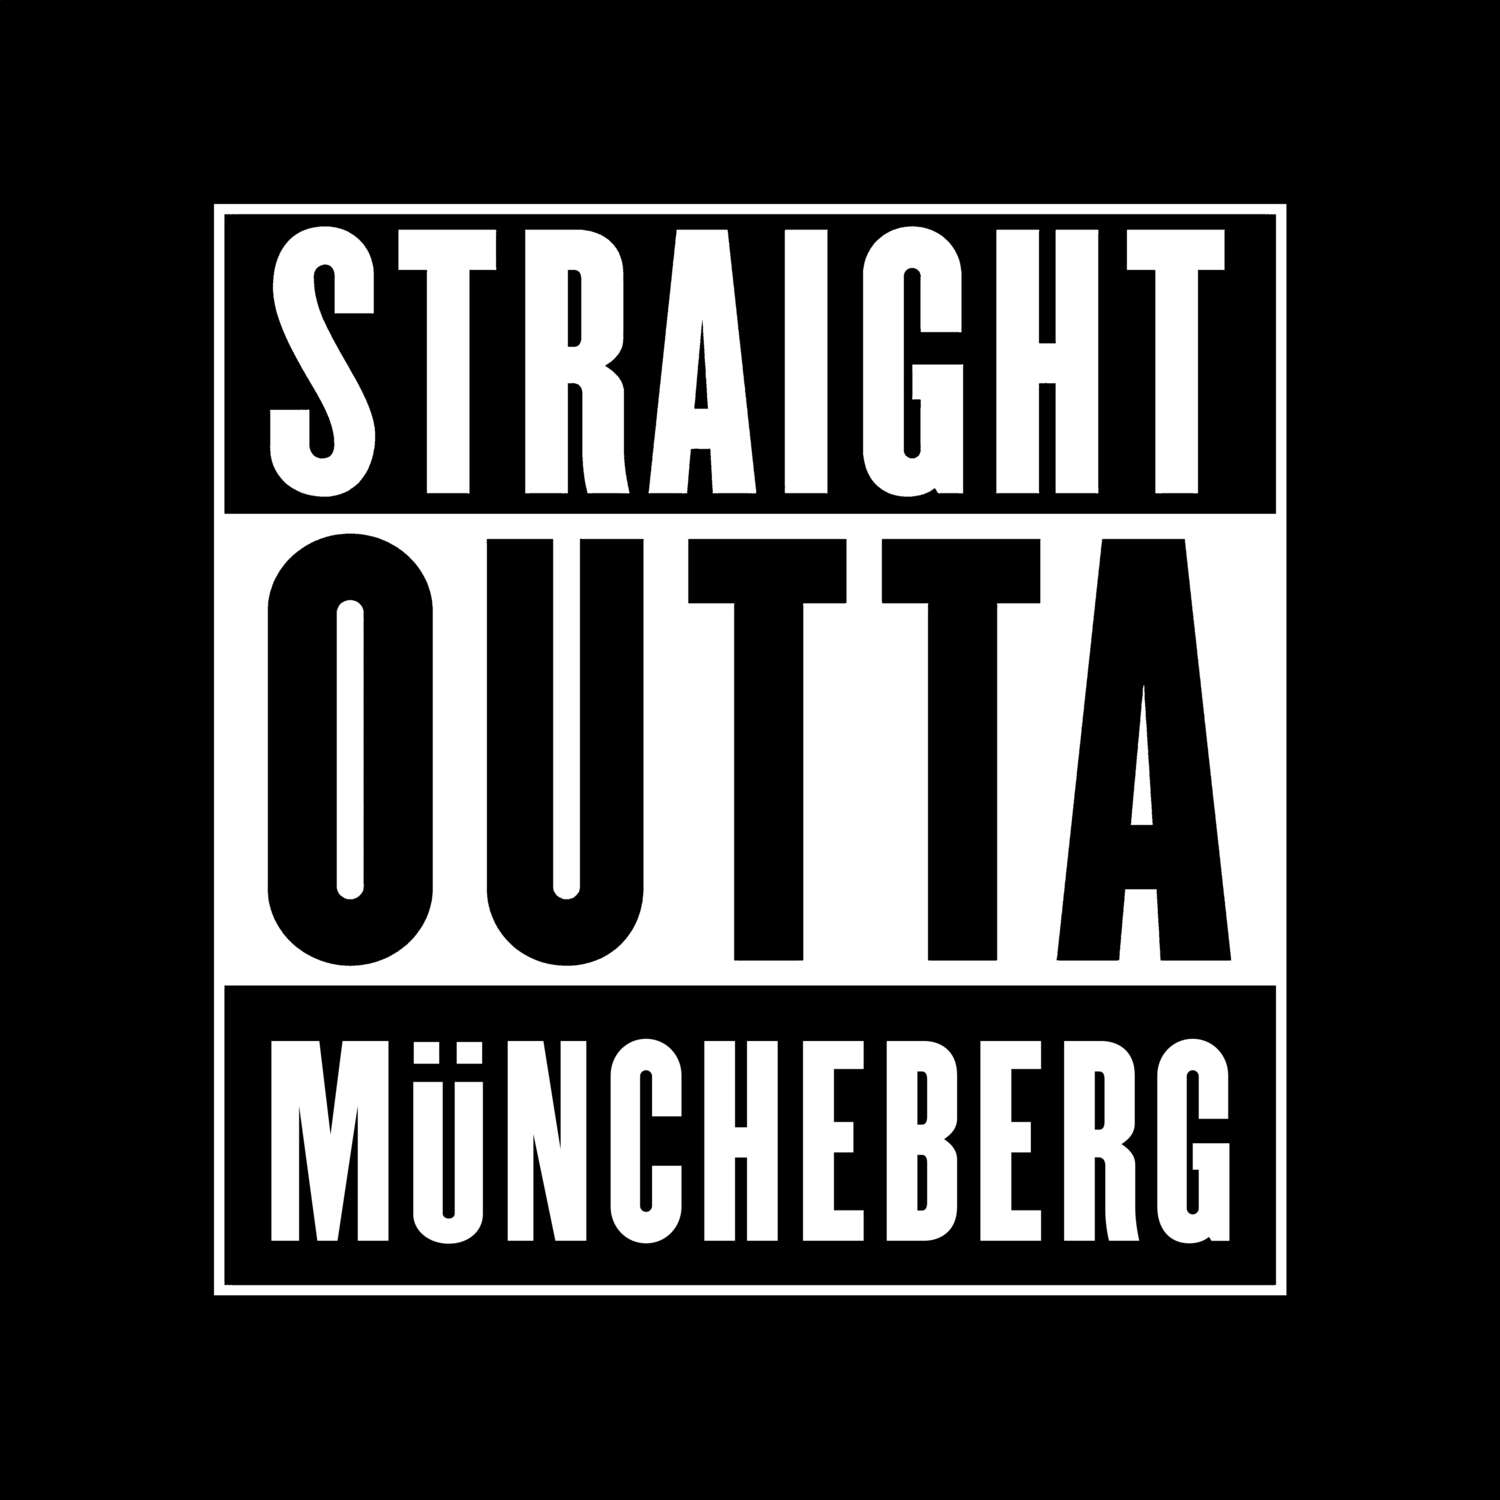 Müncheberg T-Shirt »Straight Outta«